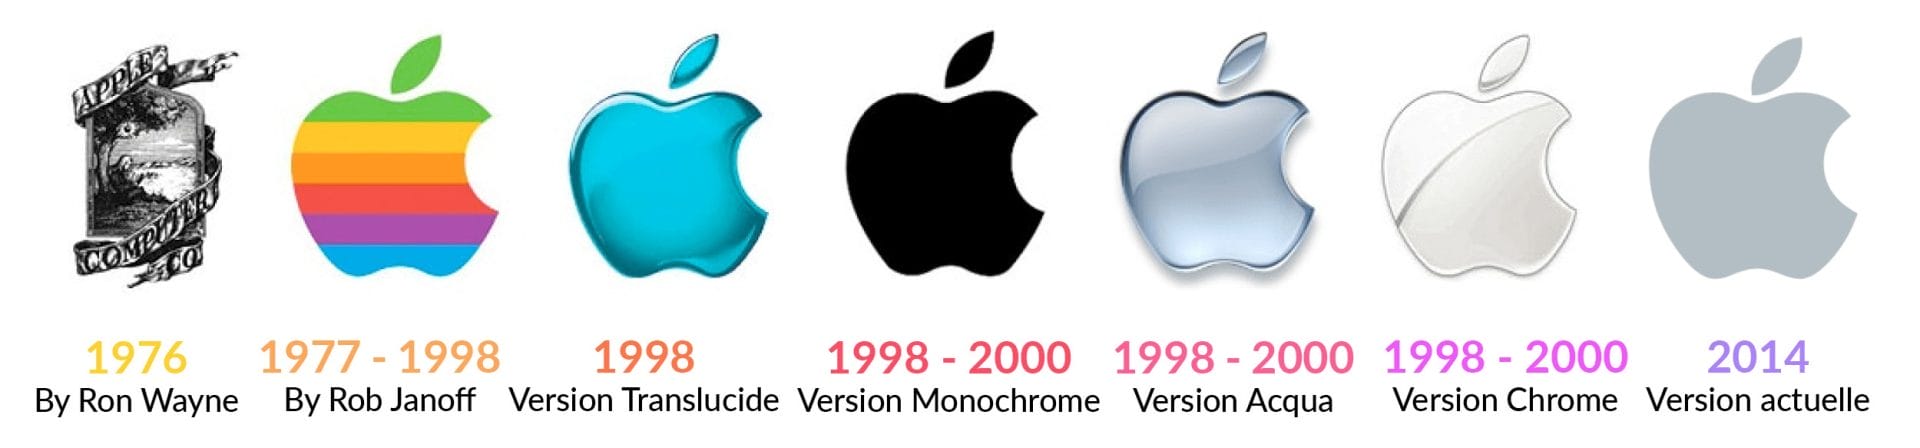 evolution charte graphique logo apple